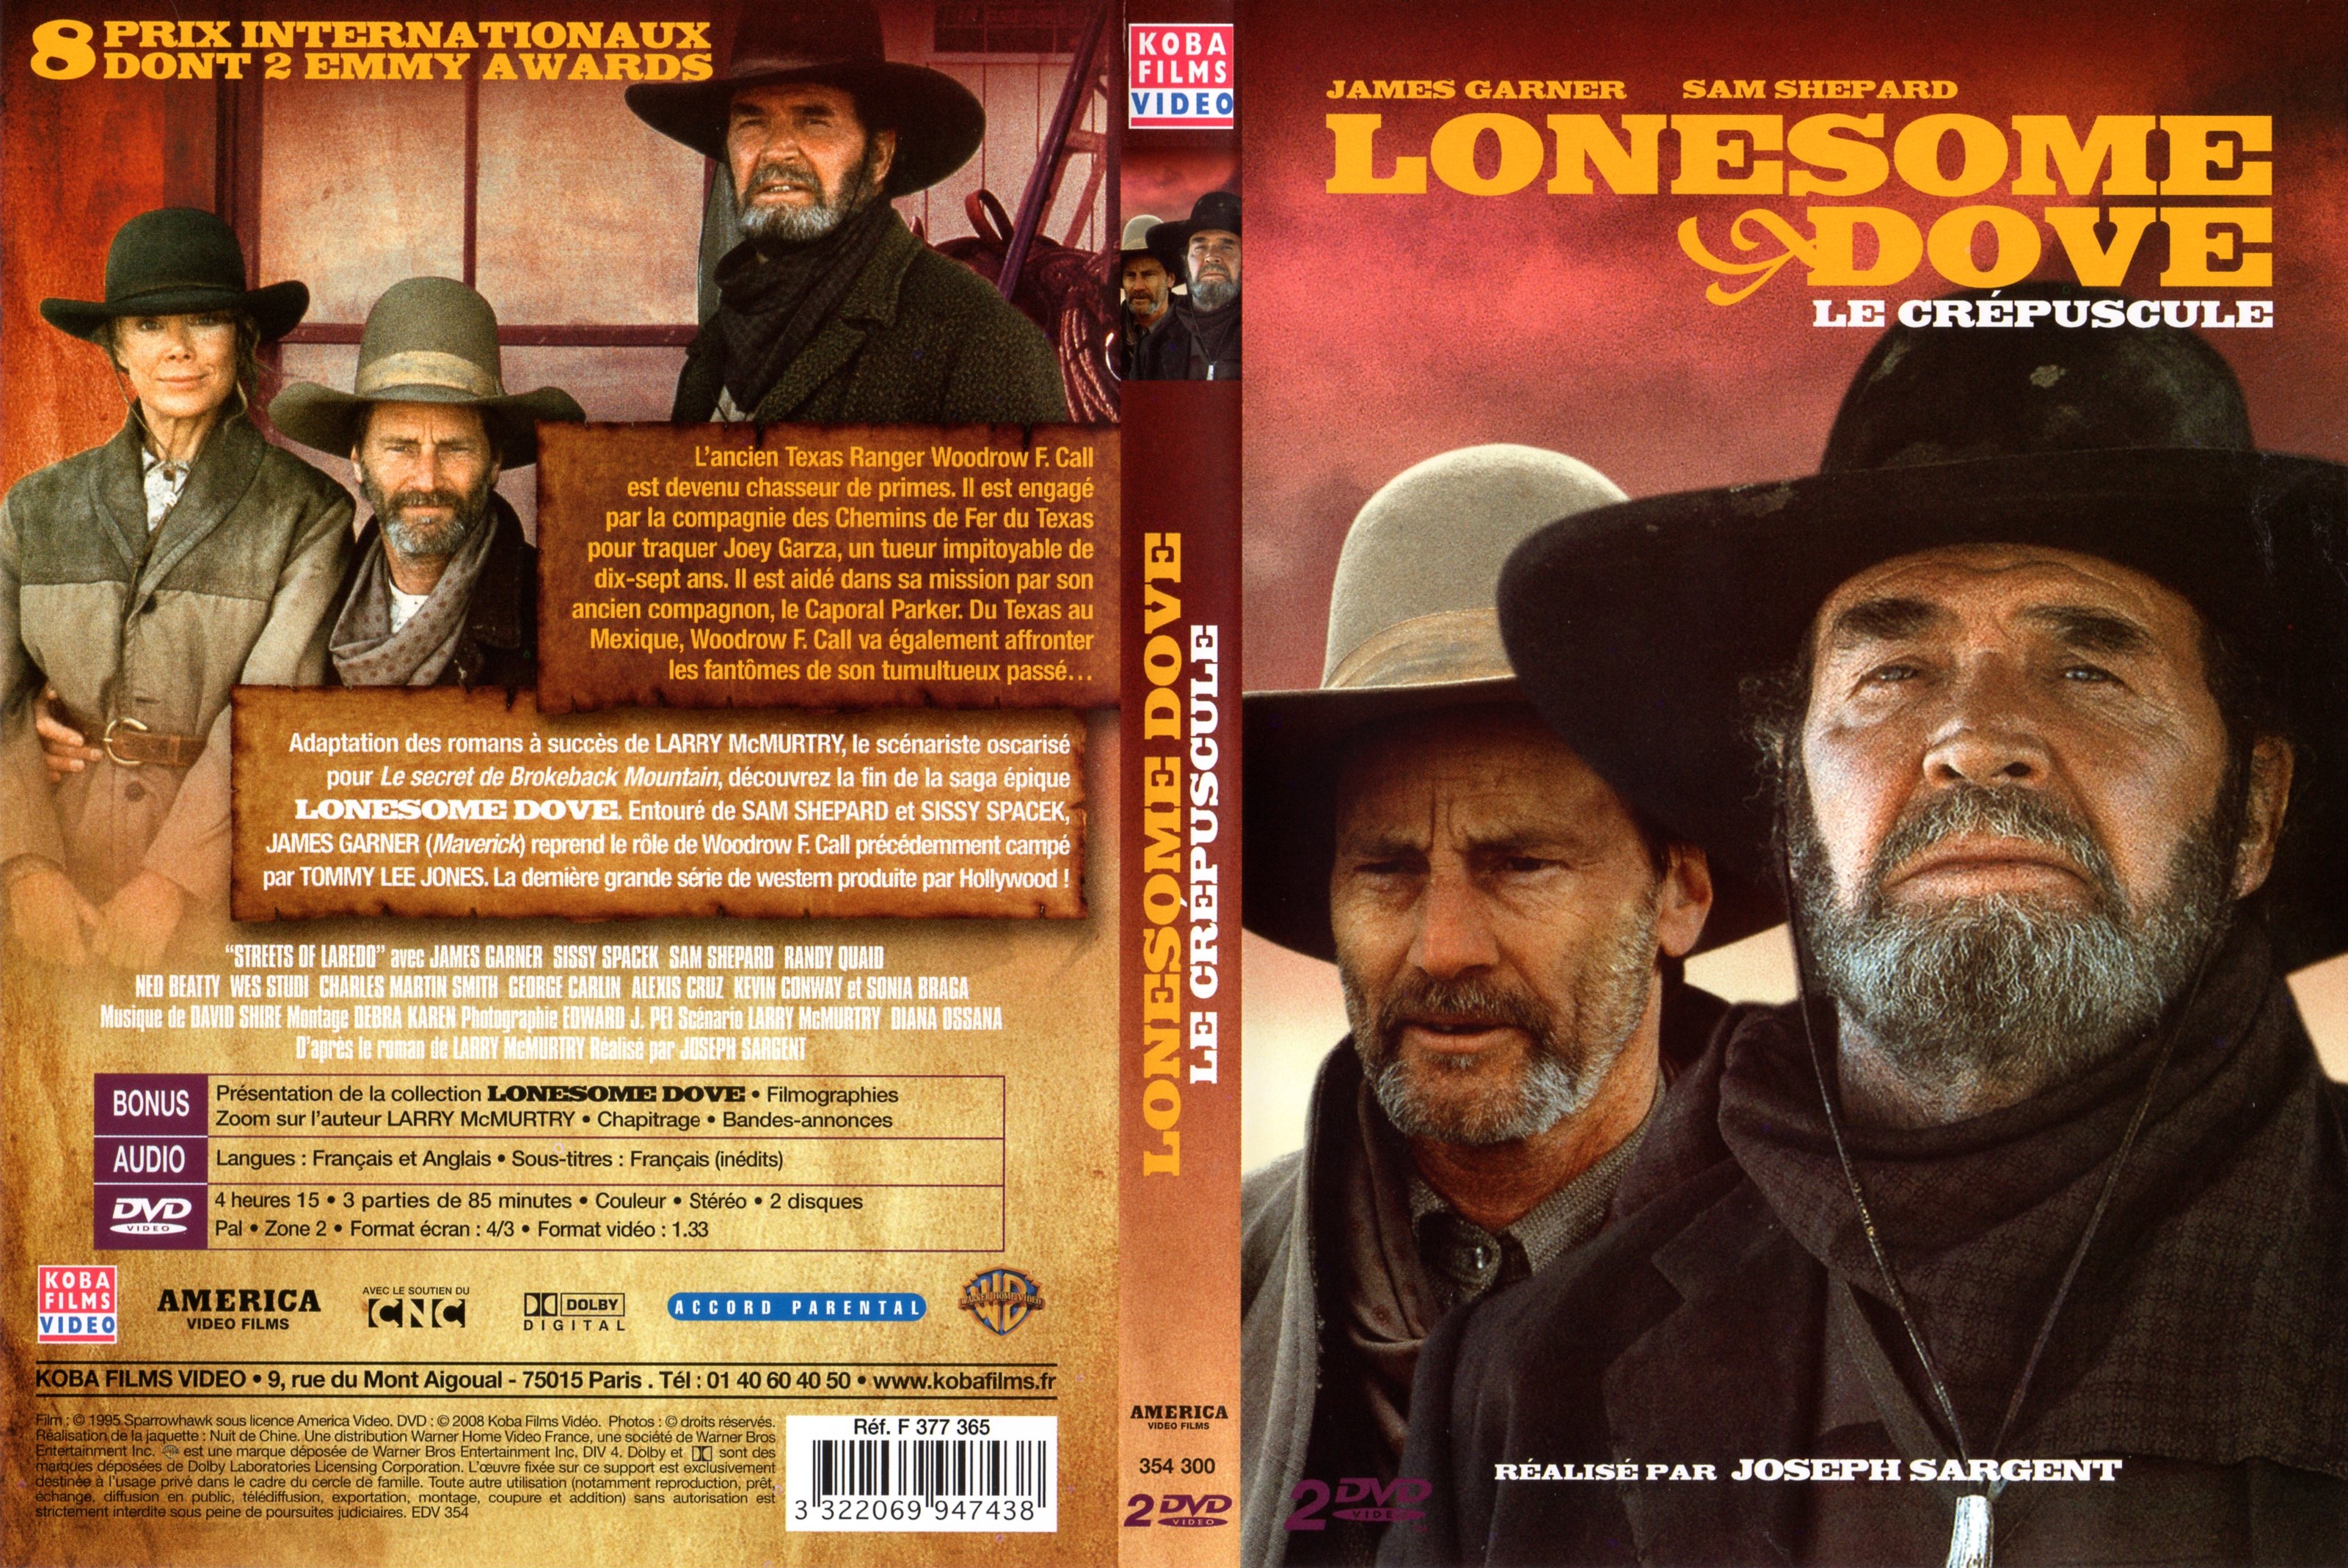 Jaquette DVD Lonesome dove le crpuscule